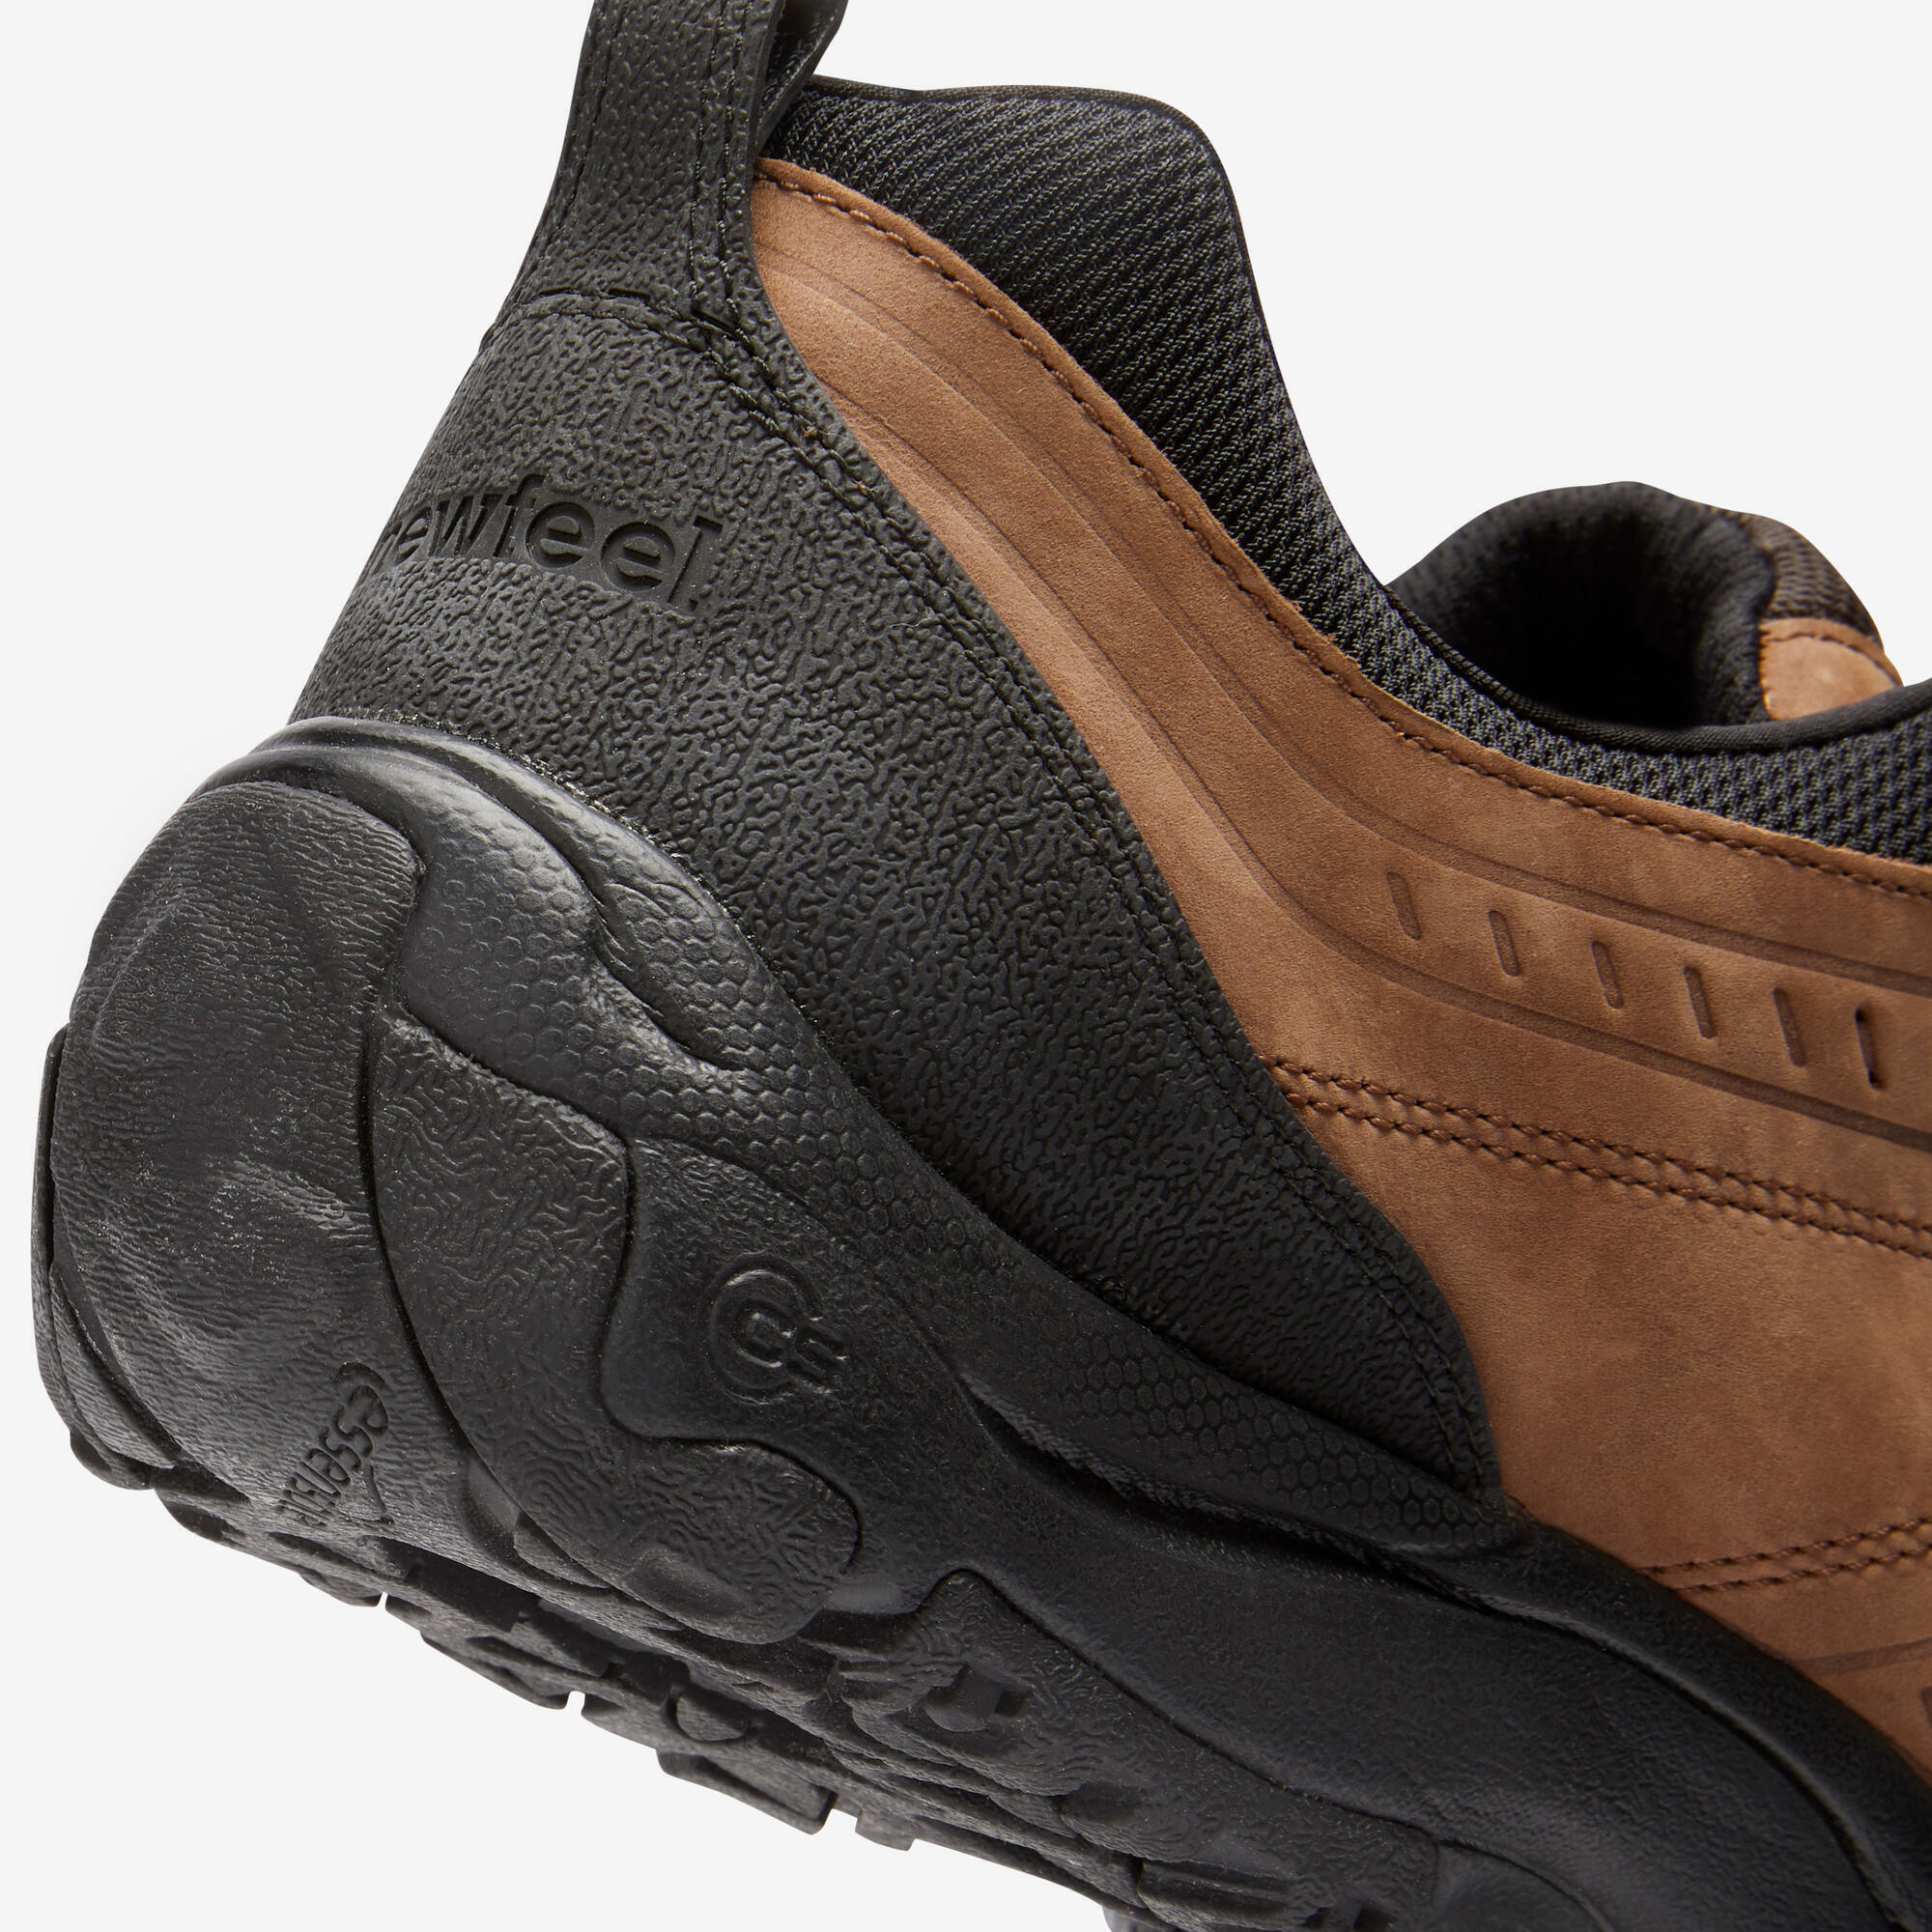 Nakuru Comfort Men's Urban Walking Leather Shoes - brown 5/8